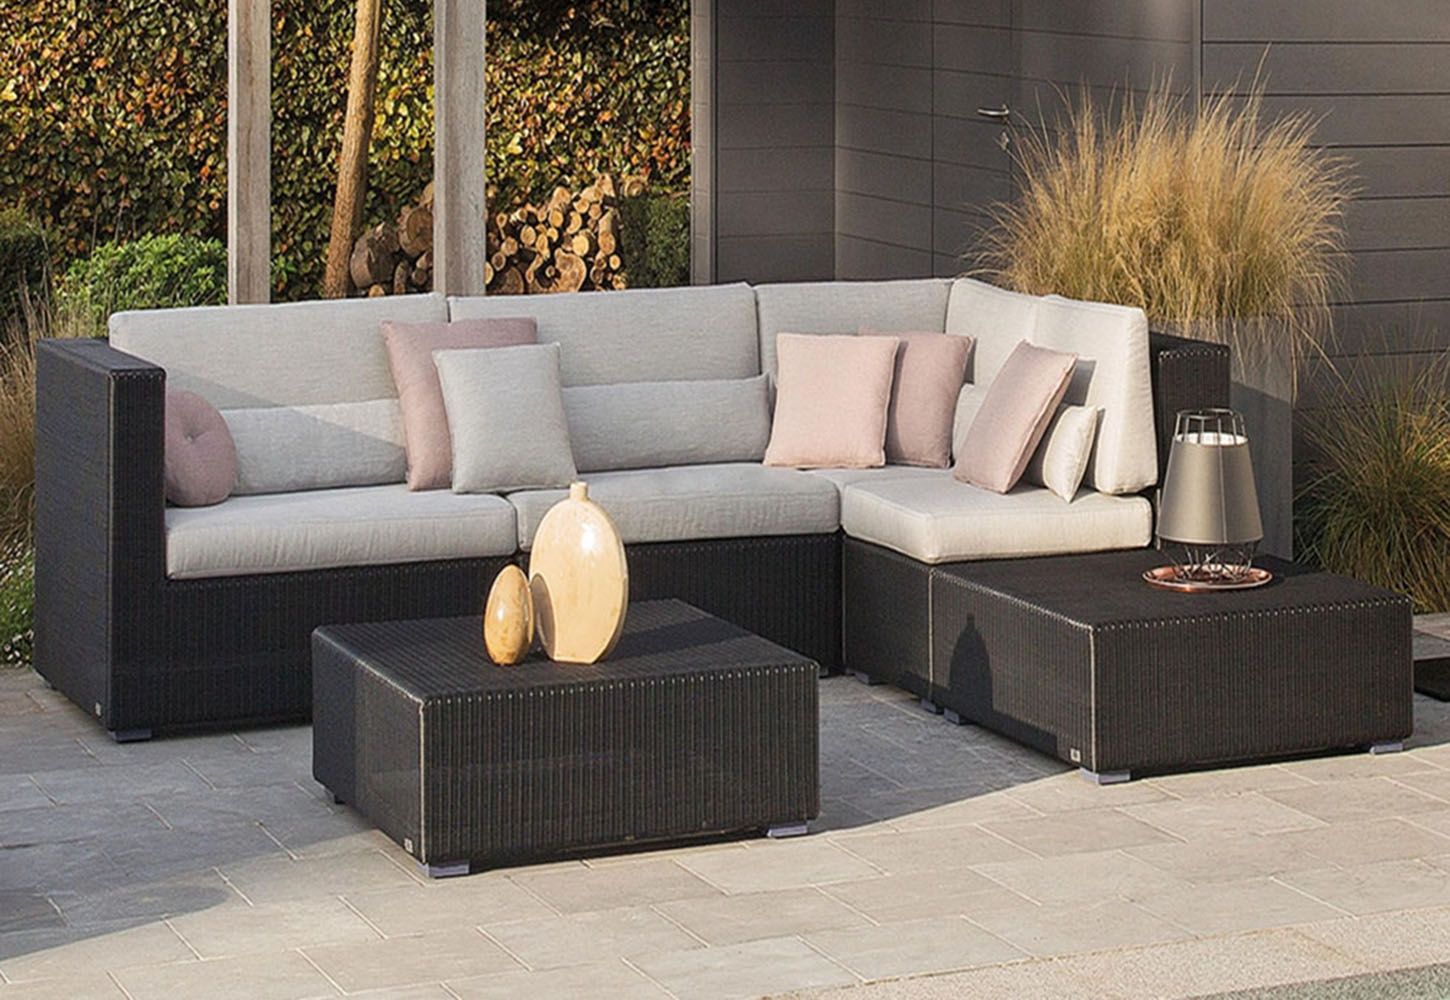 contemporary outdoor l shape rattan sofa set